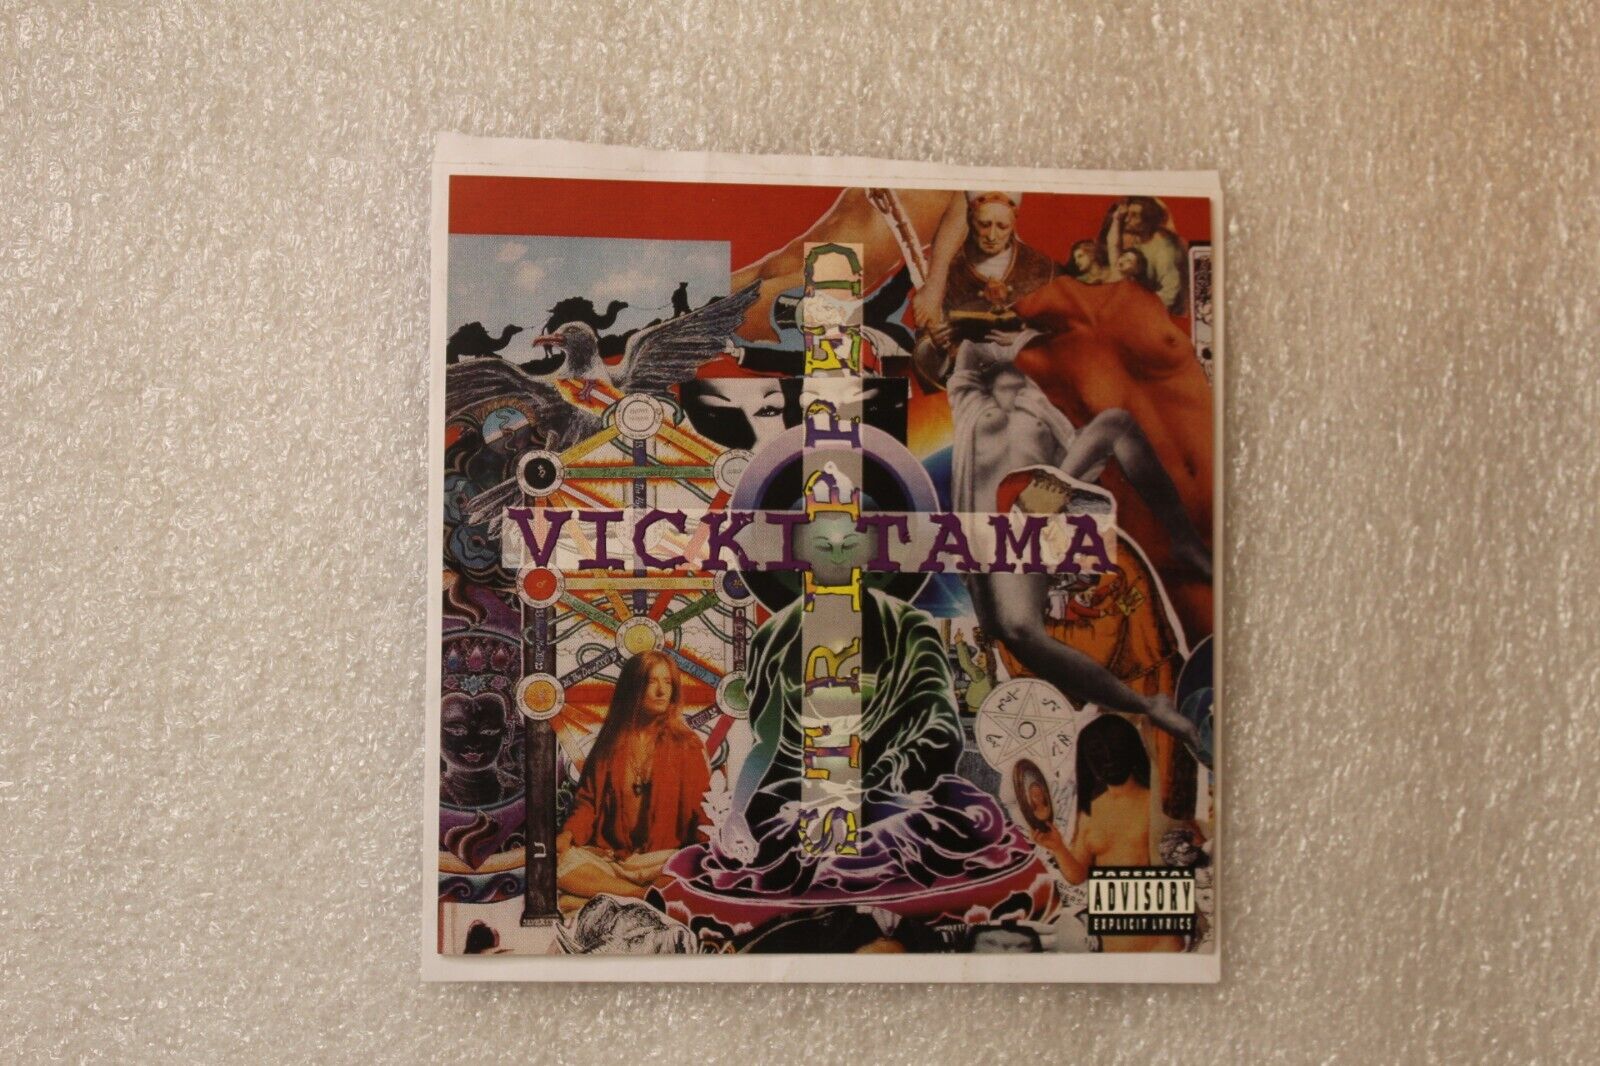 Stripped by Vicki Tama CD